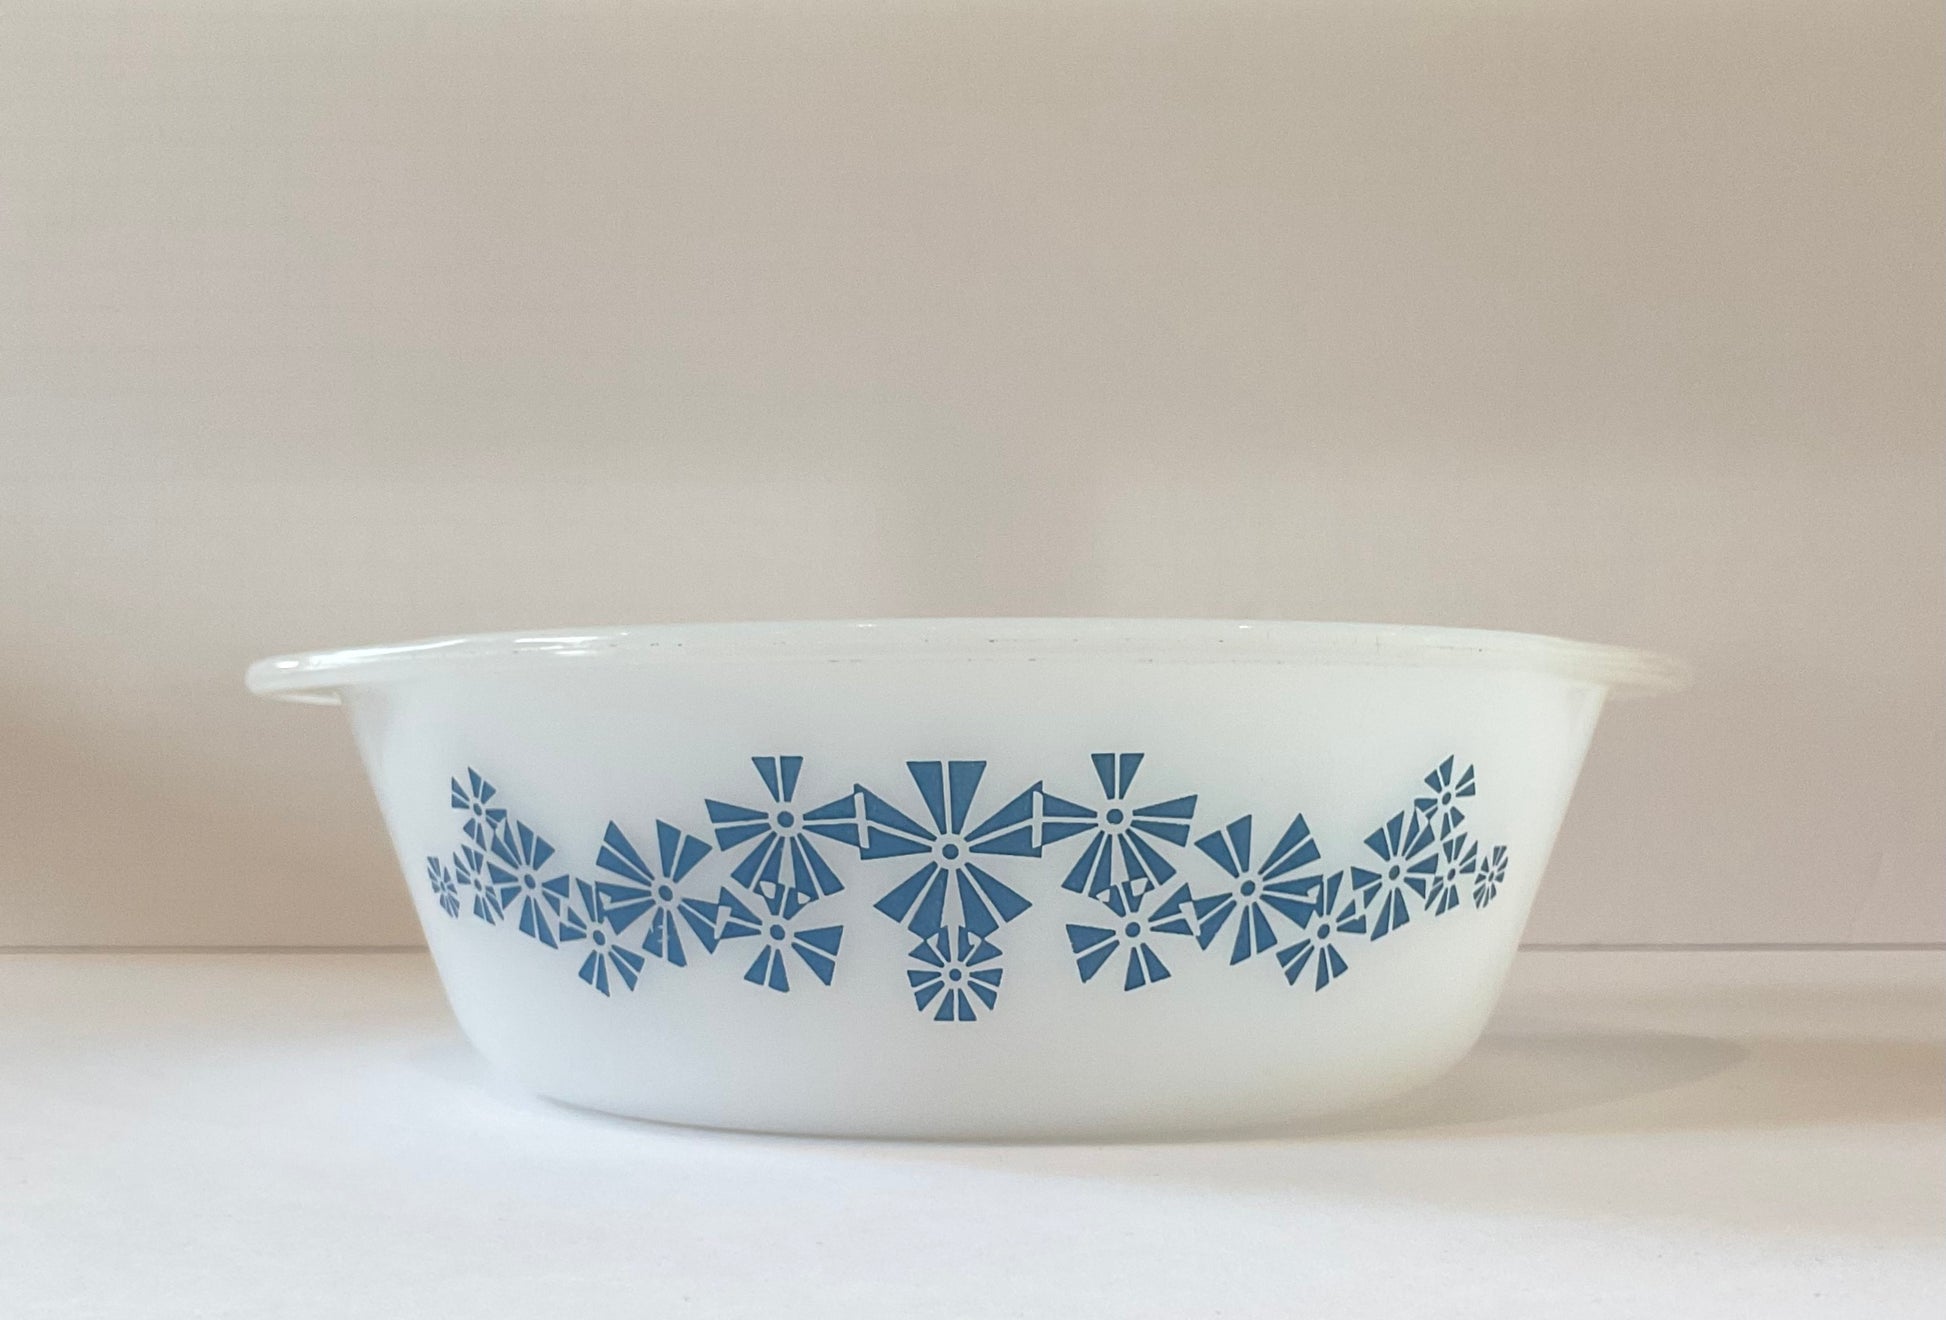 Vintage Pyrex 1 Quart Divided Casserole Dish / With Lid Blue white Flowers